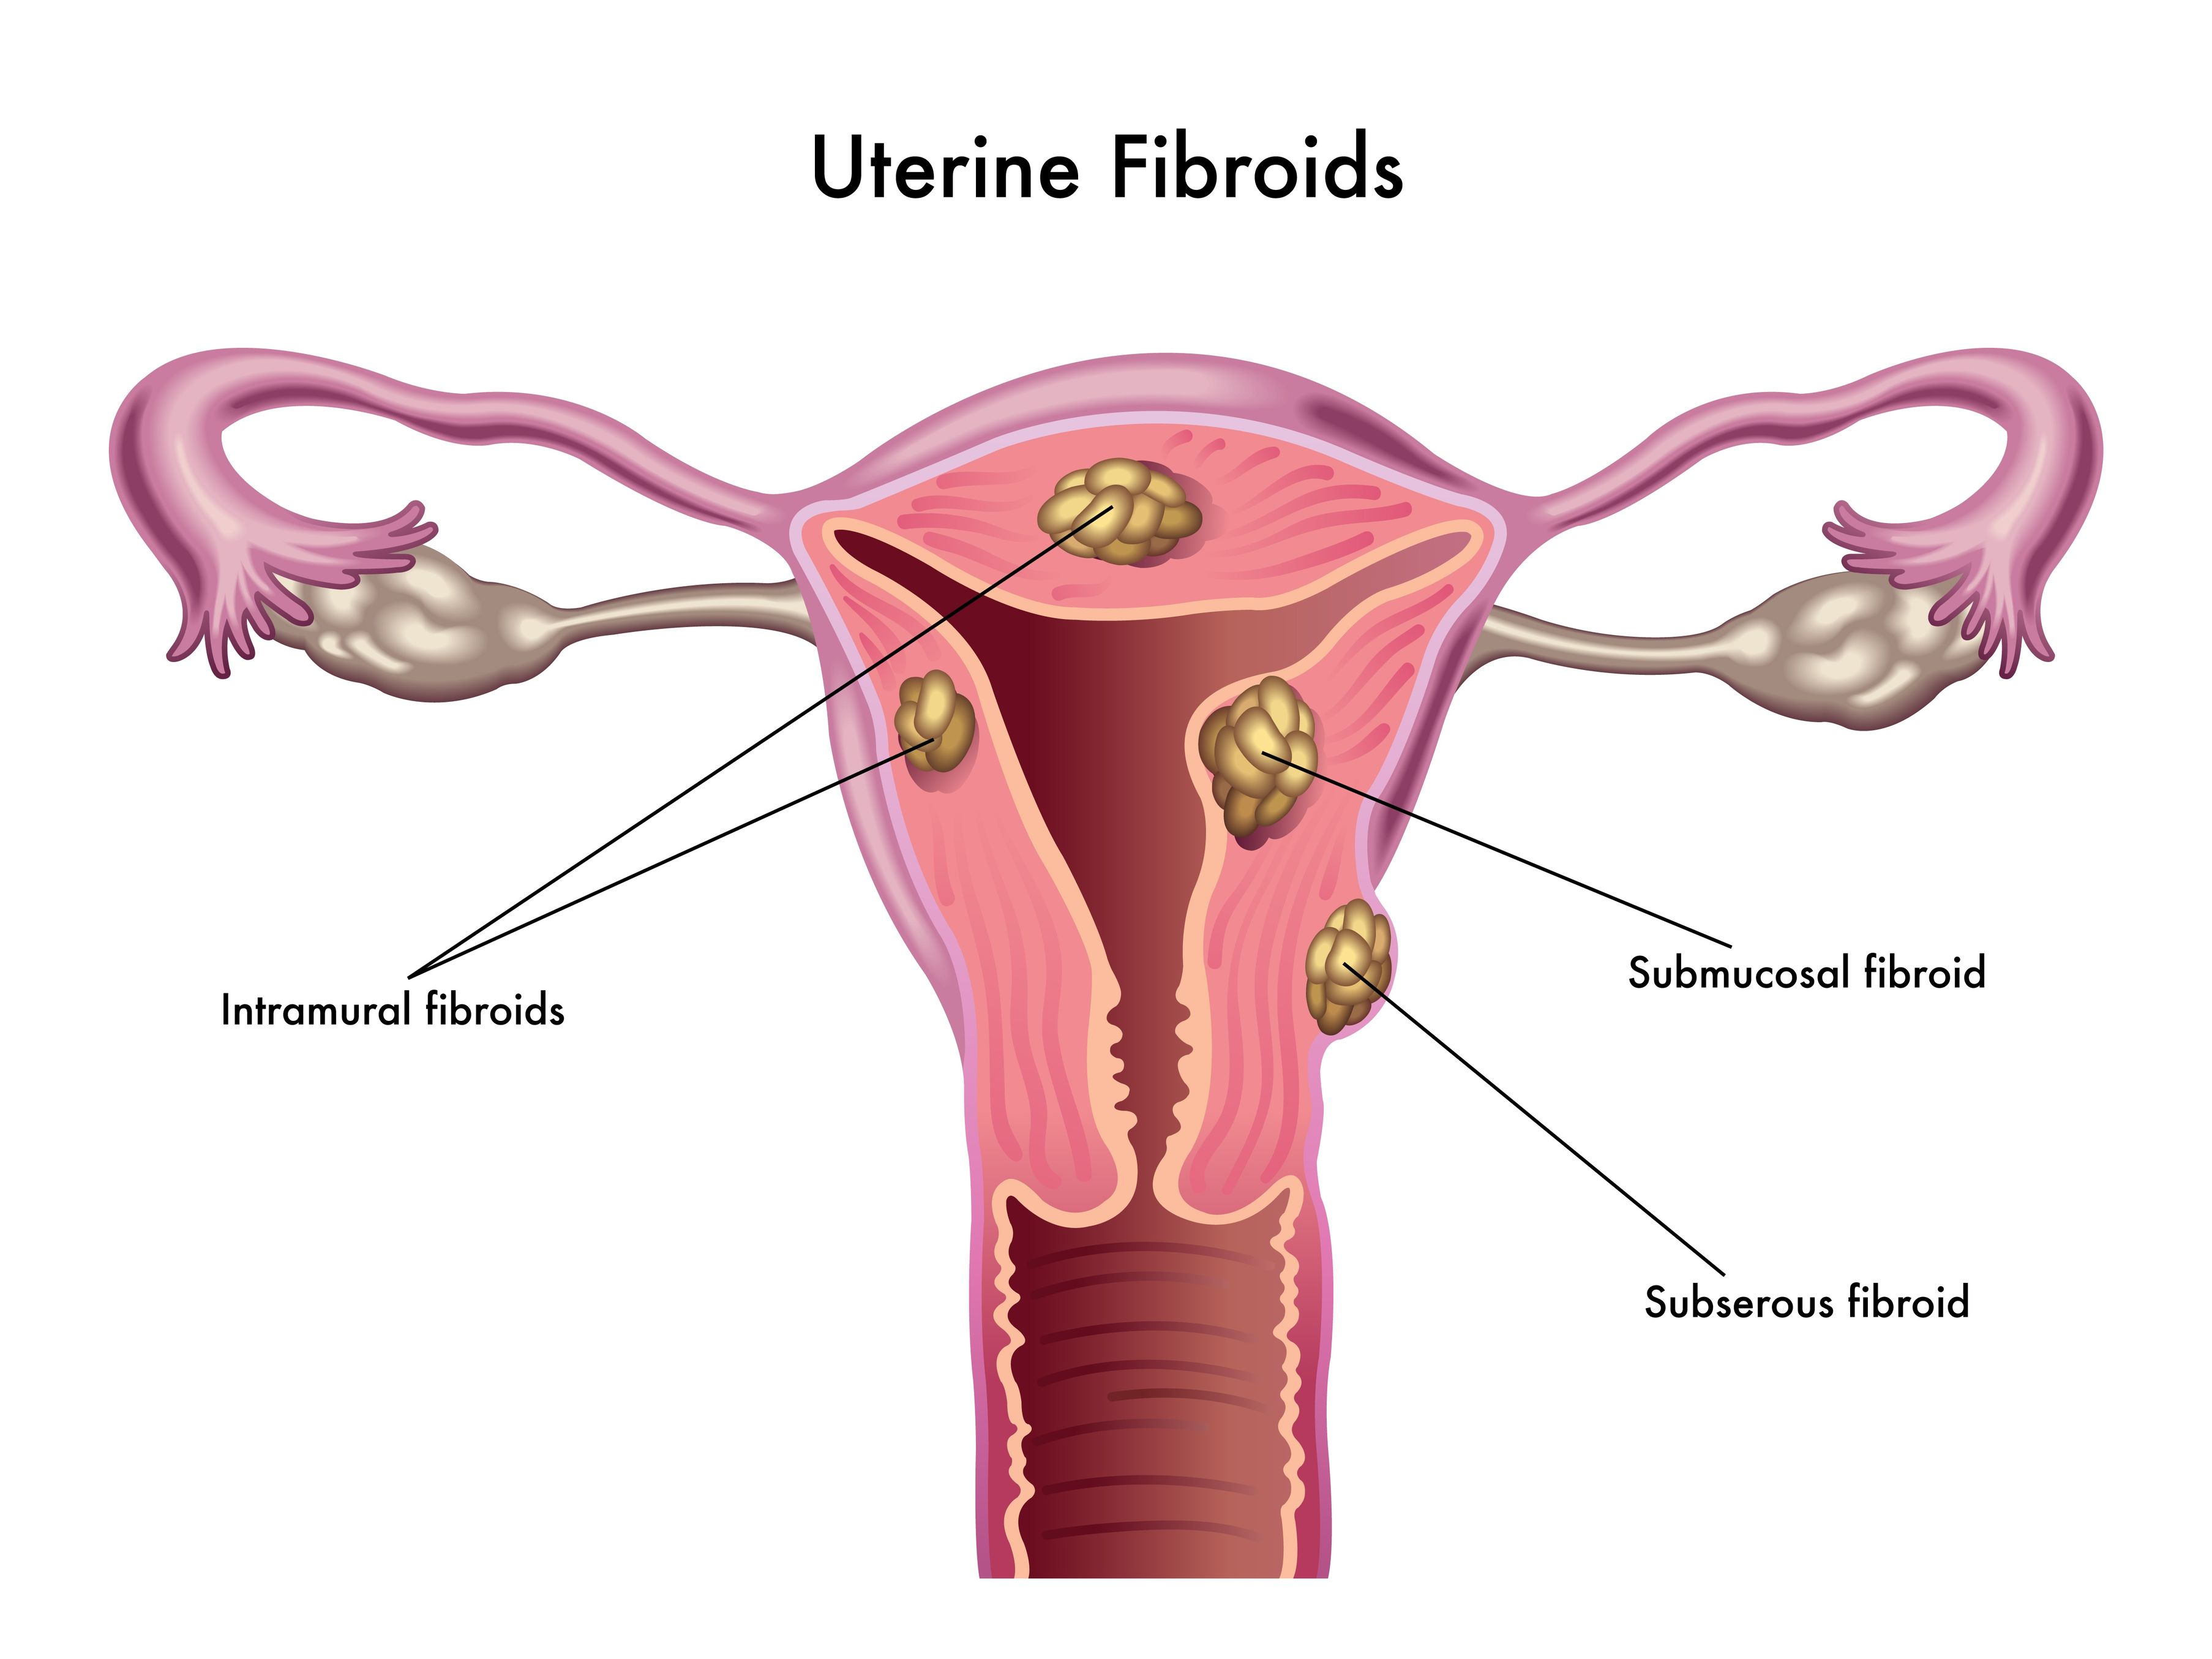 Uterine Fibroids - Integrative treatment options